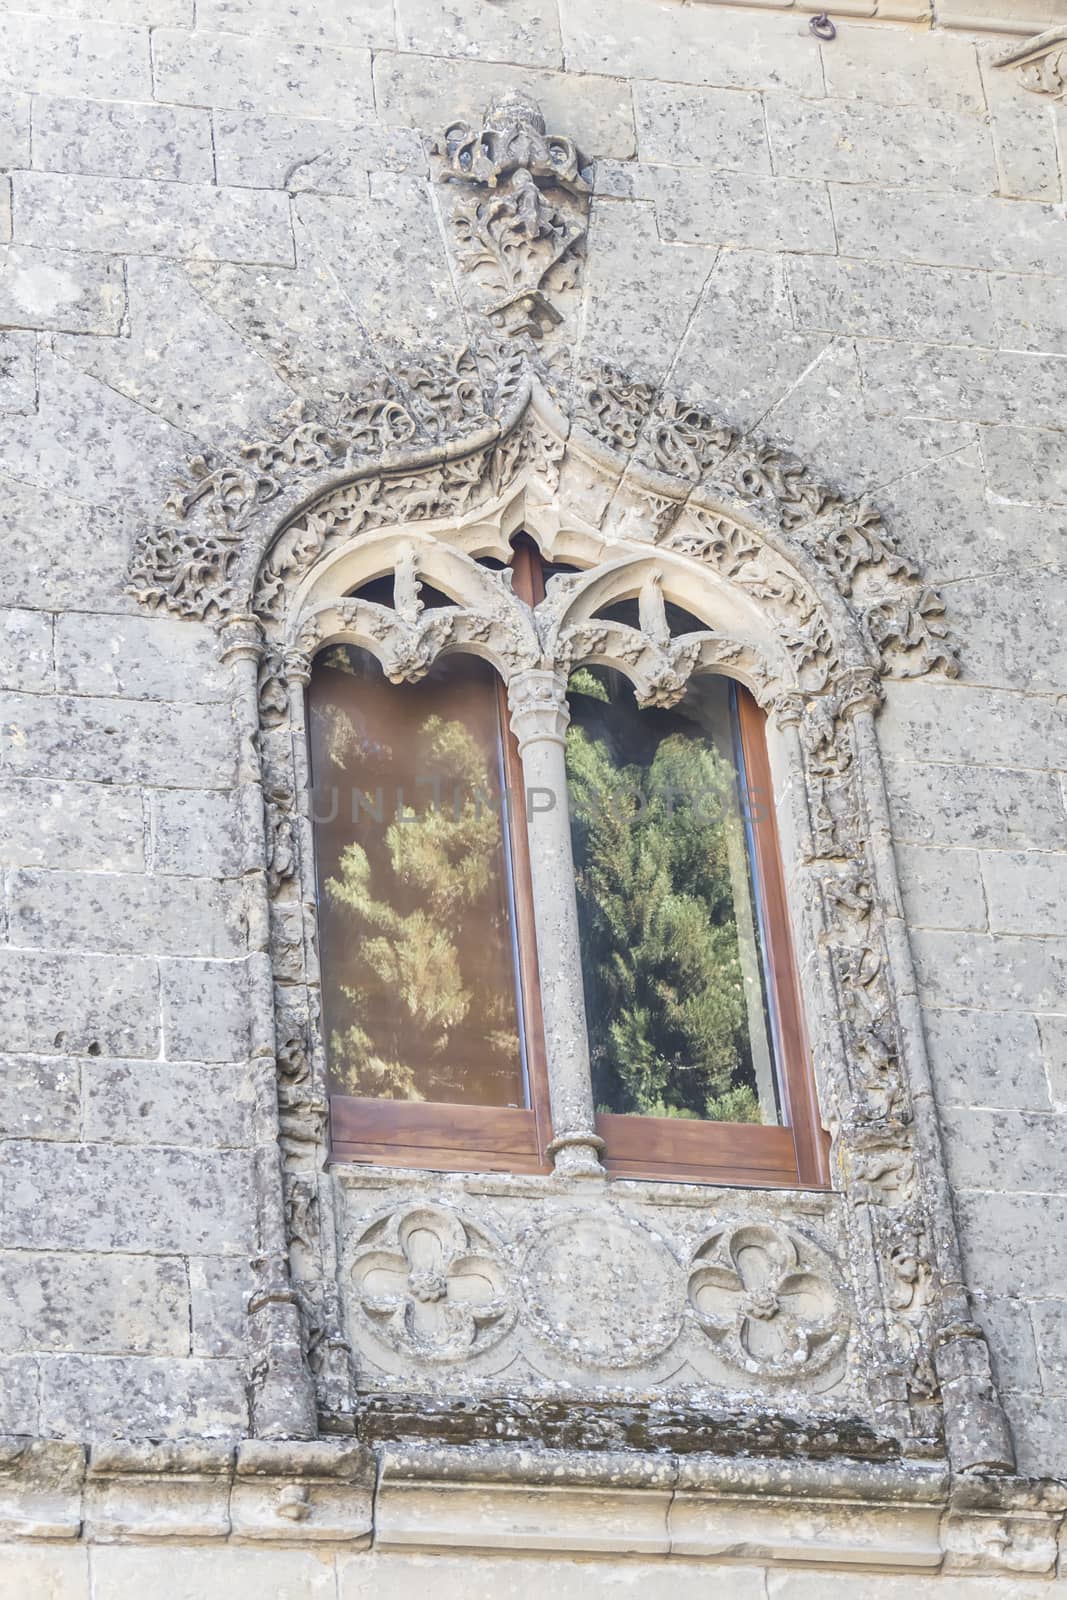 Baeza cathedral window detail, Jaen, Spain by max8xam